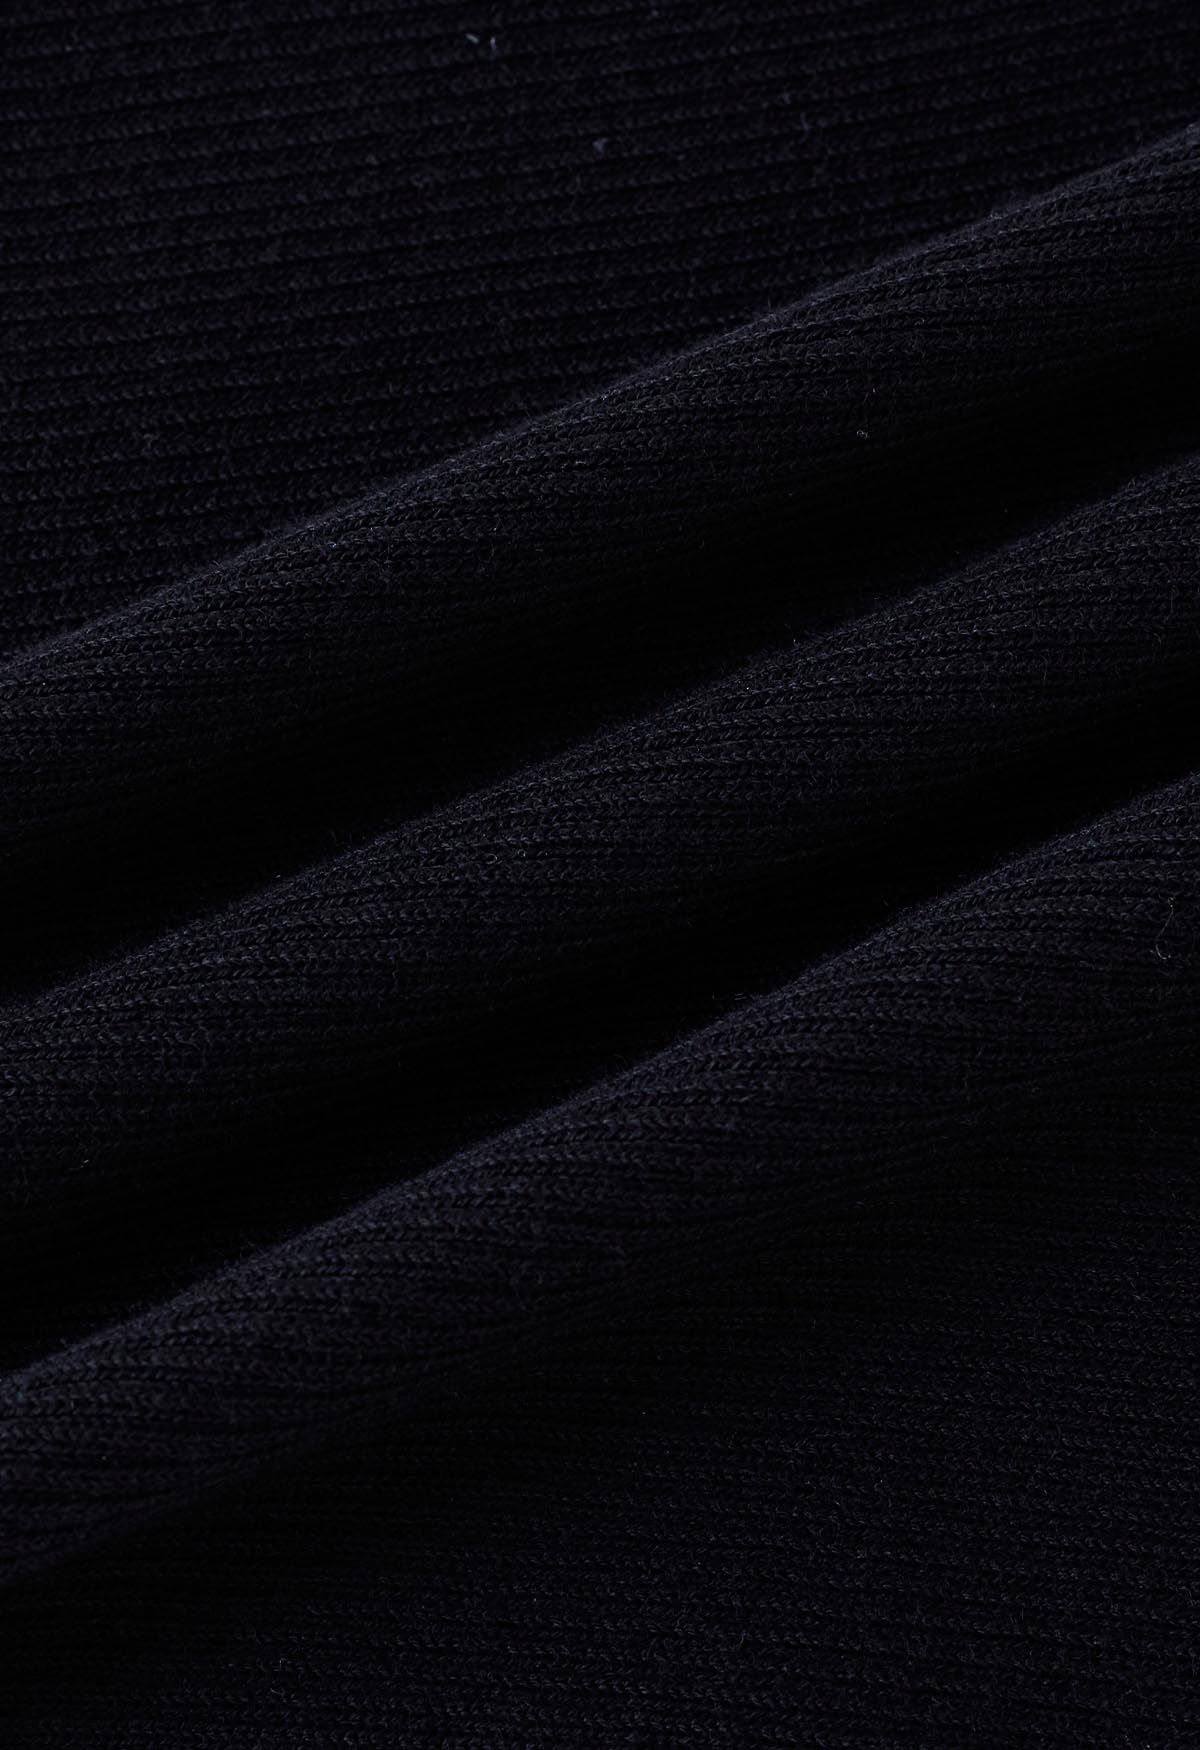 Folded Off-Shoulder Rib Knit Top in Black